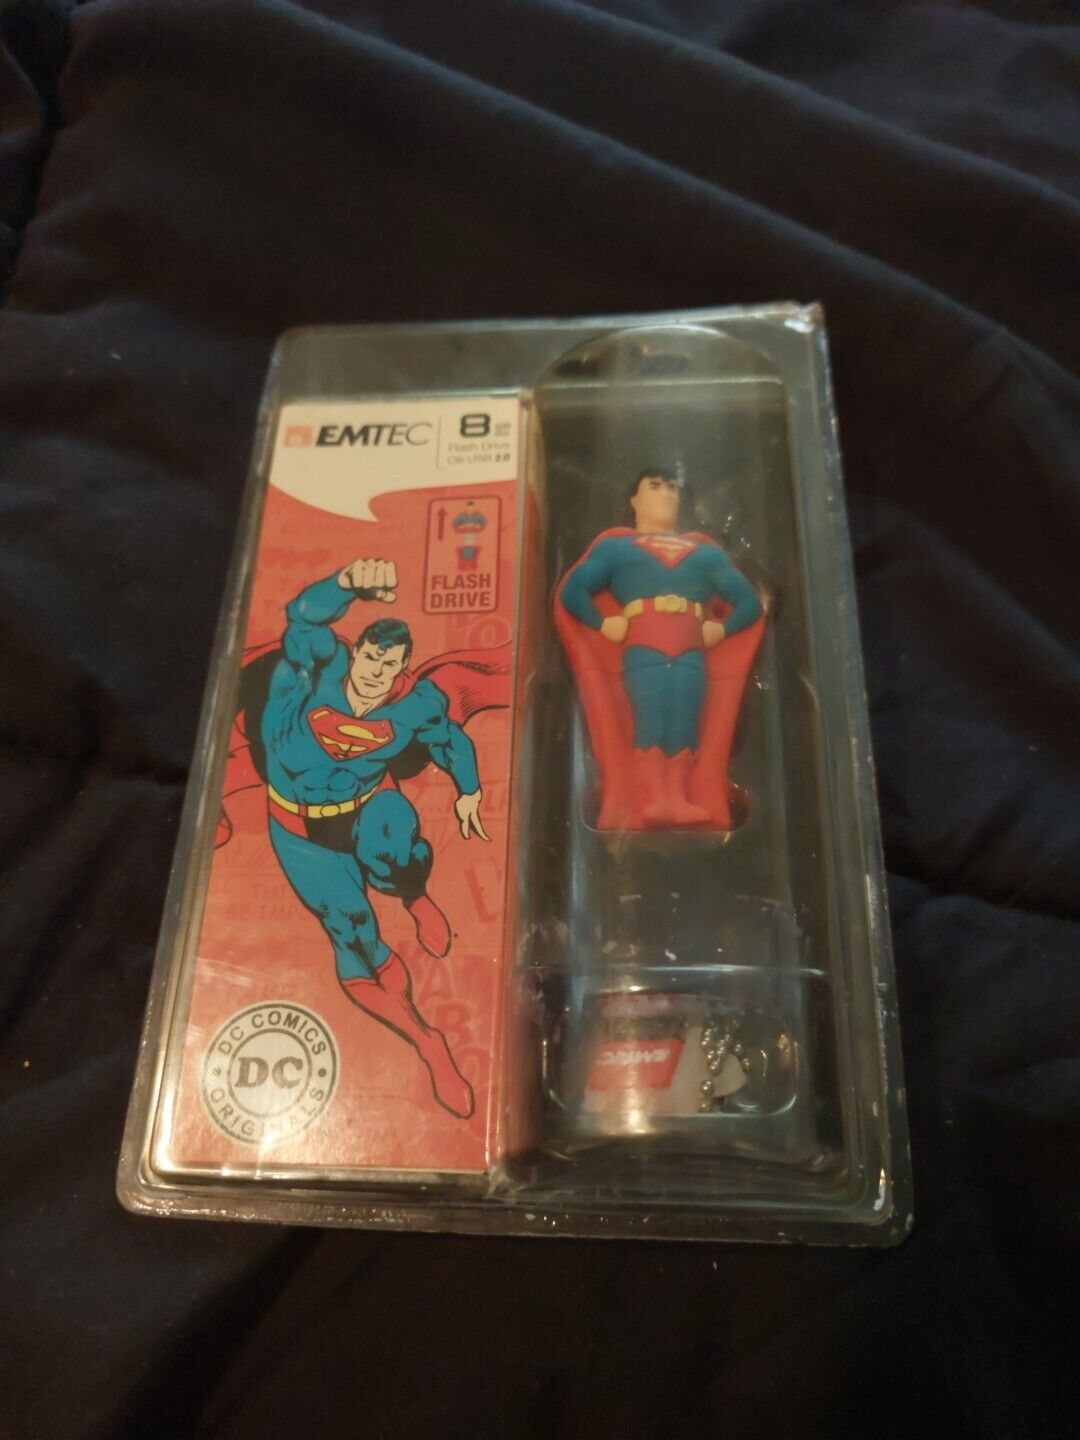 Flash Drive SuperMan Super Hero 8gb EMTEC DC Comics Kids Action Figure Tattoos